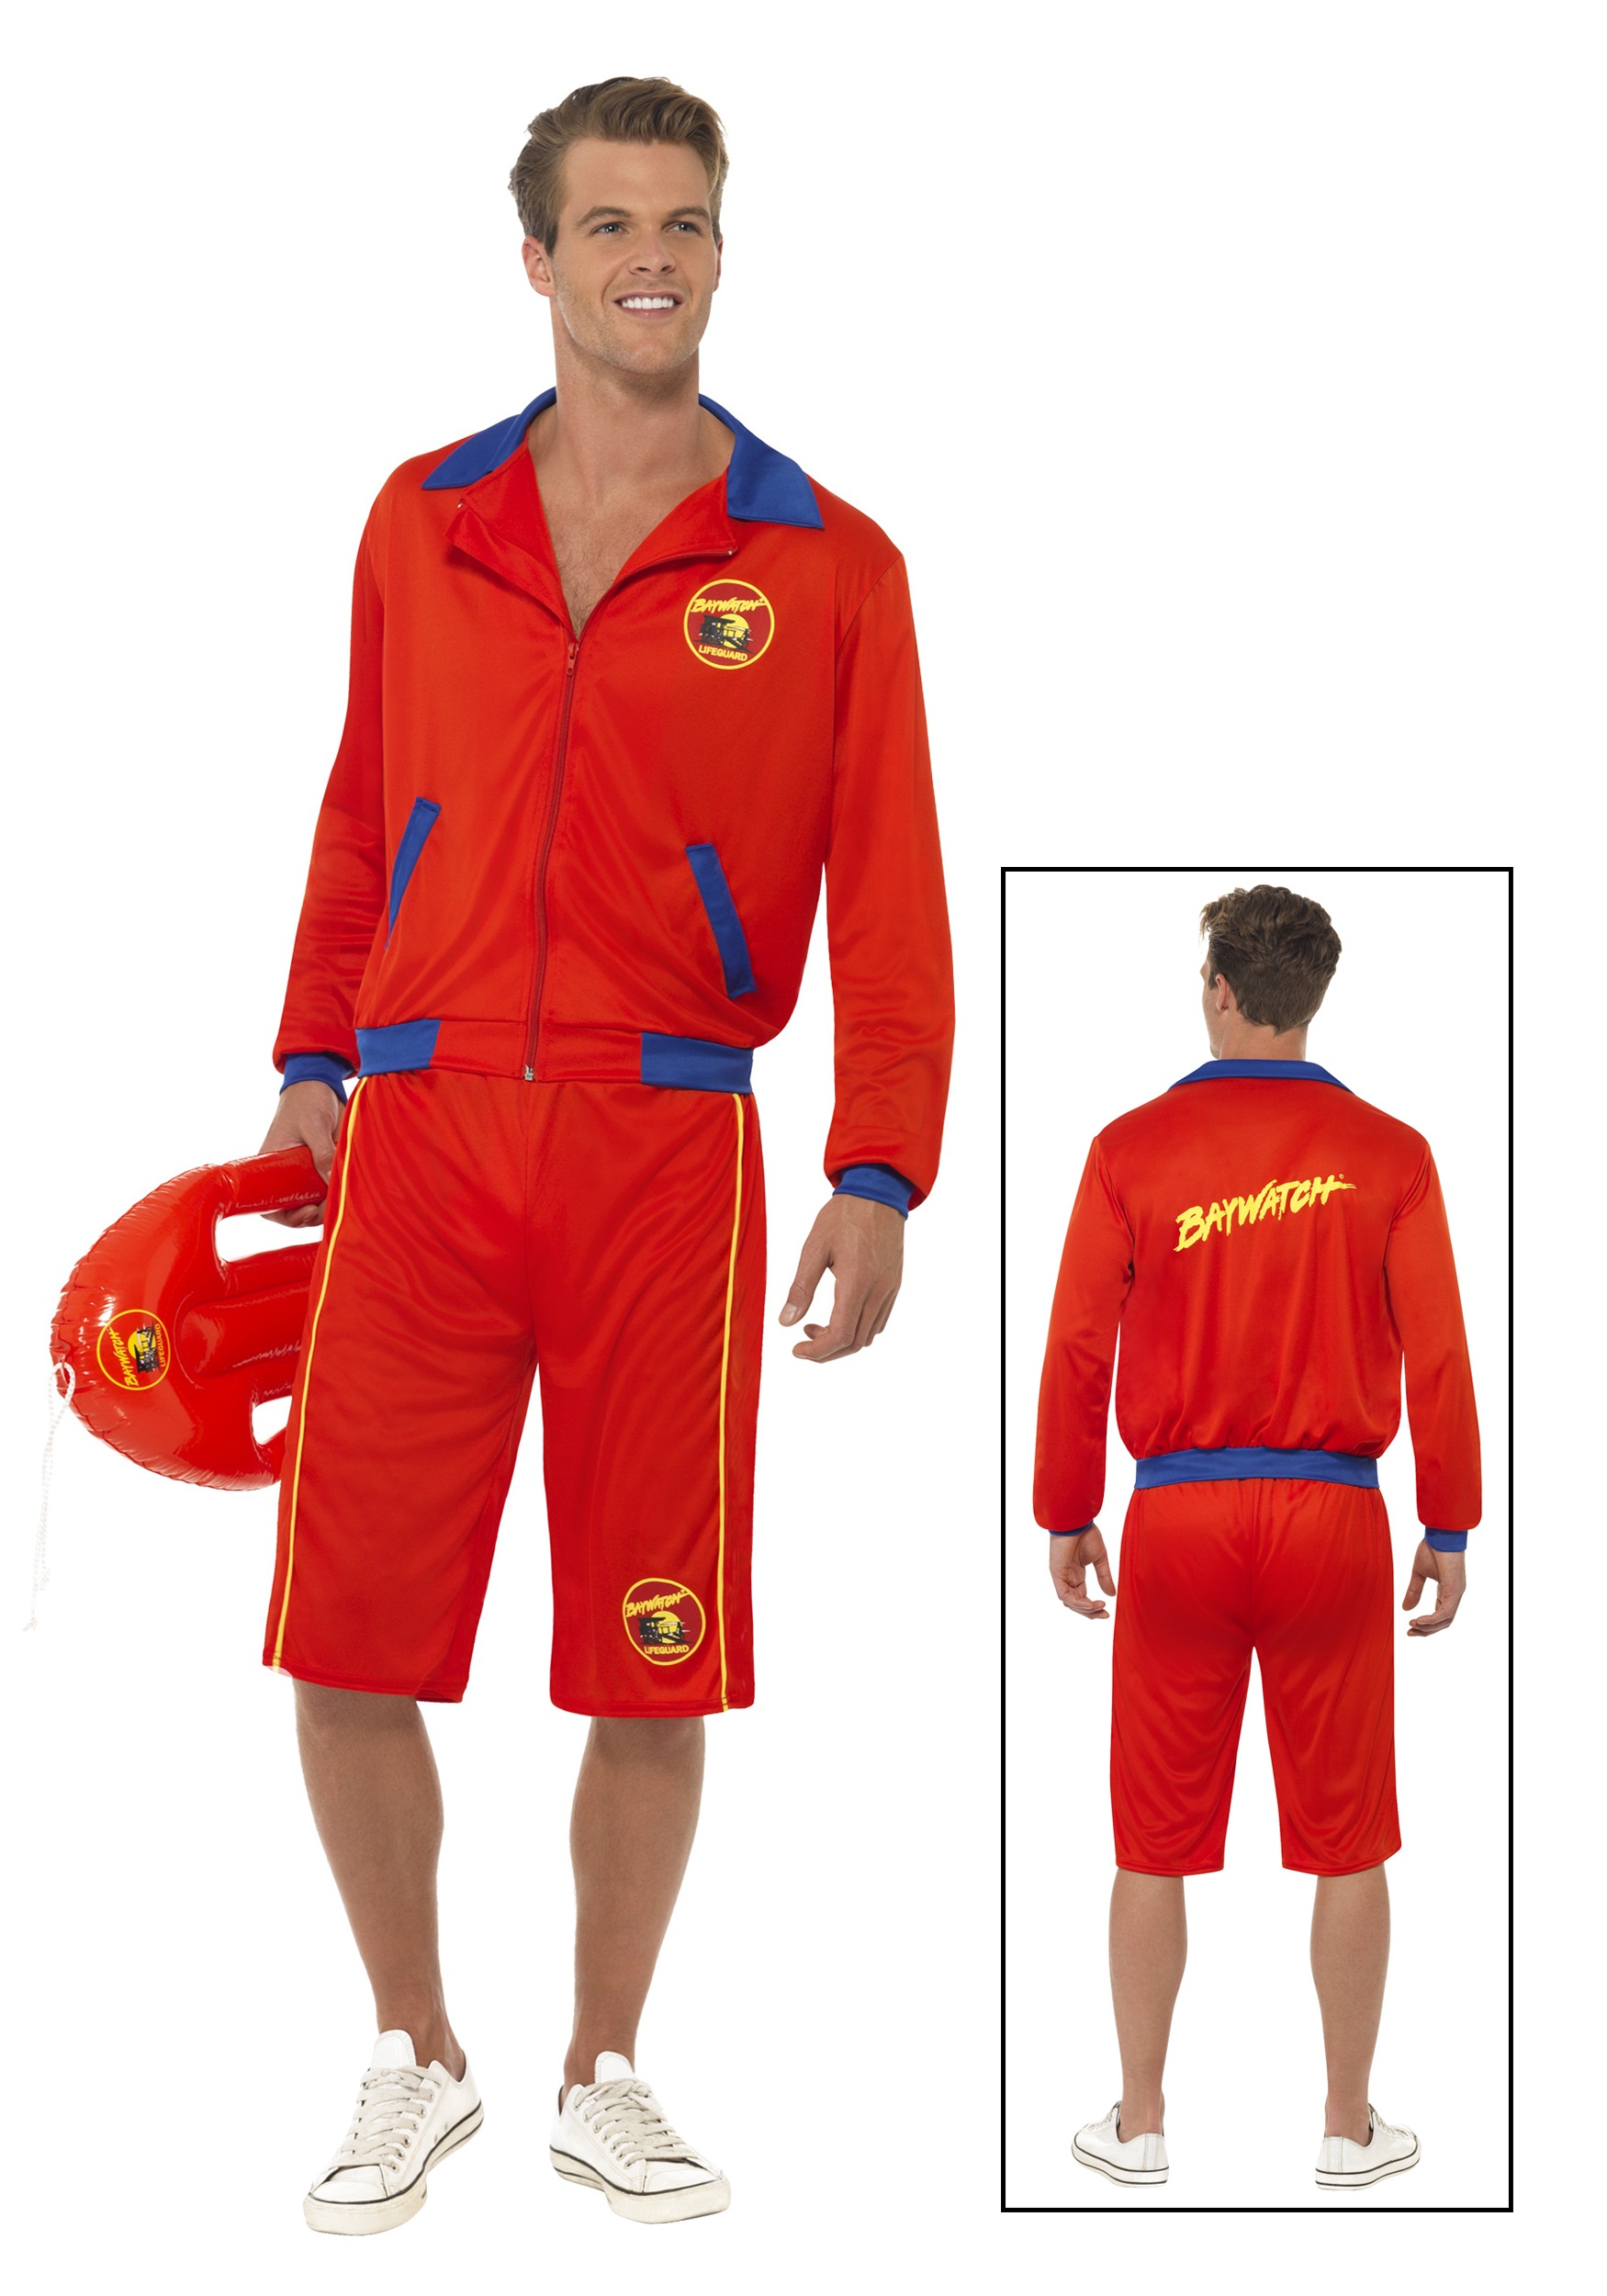 2.) Men's Baywatch Beach Lifeguard Costume